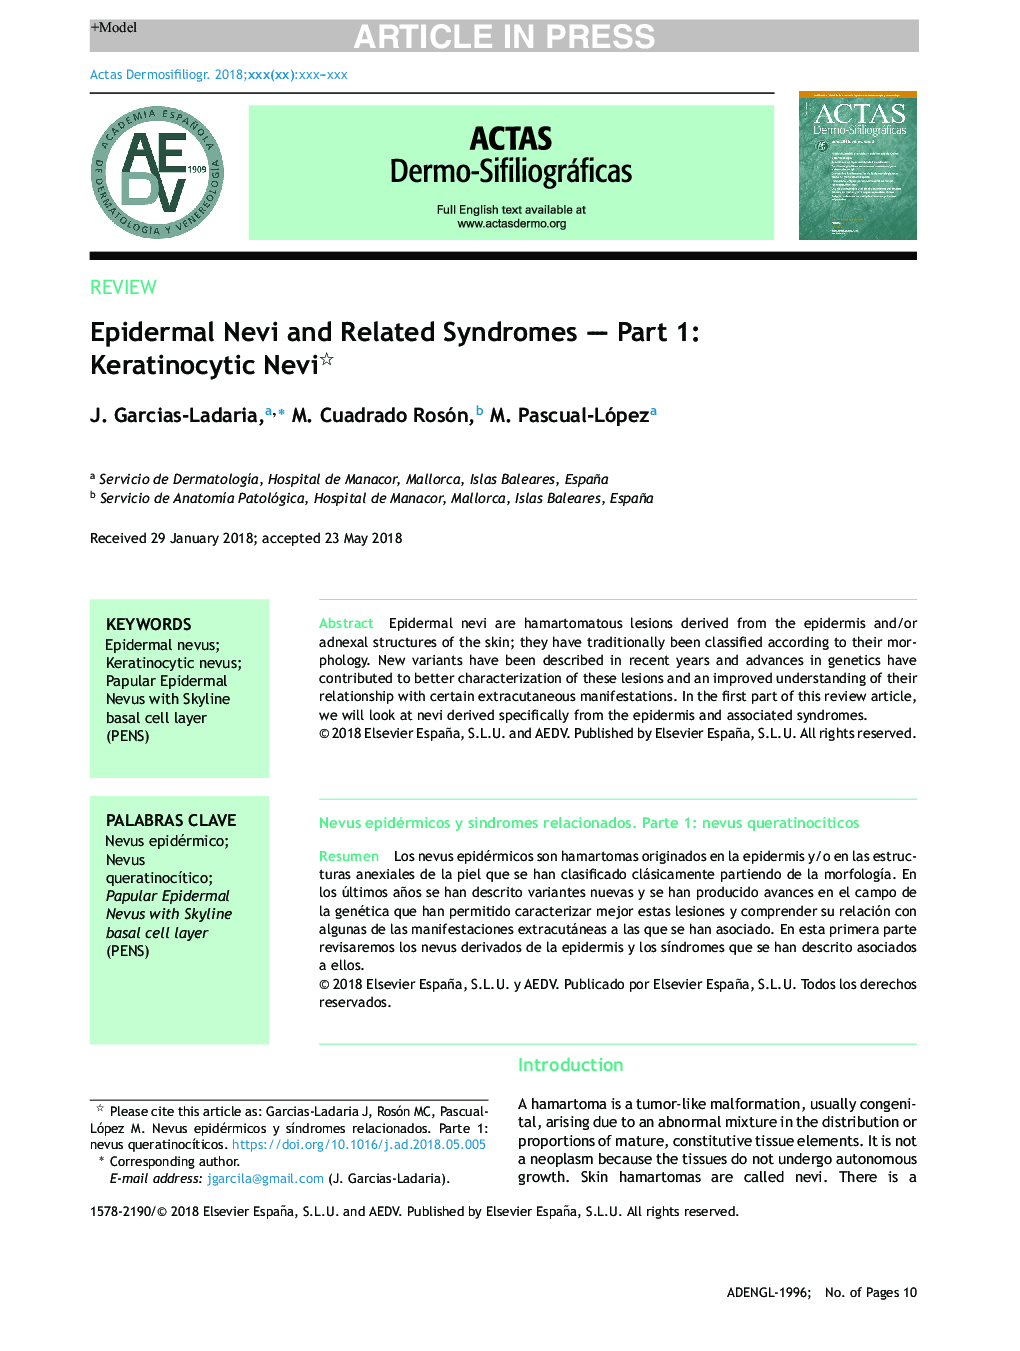 Epidermal Nevi and Related Syndromes - Part 1: Keratinocytic Nevi